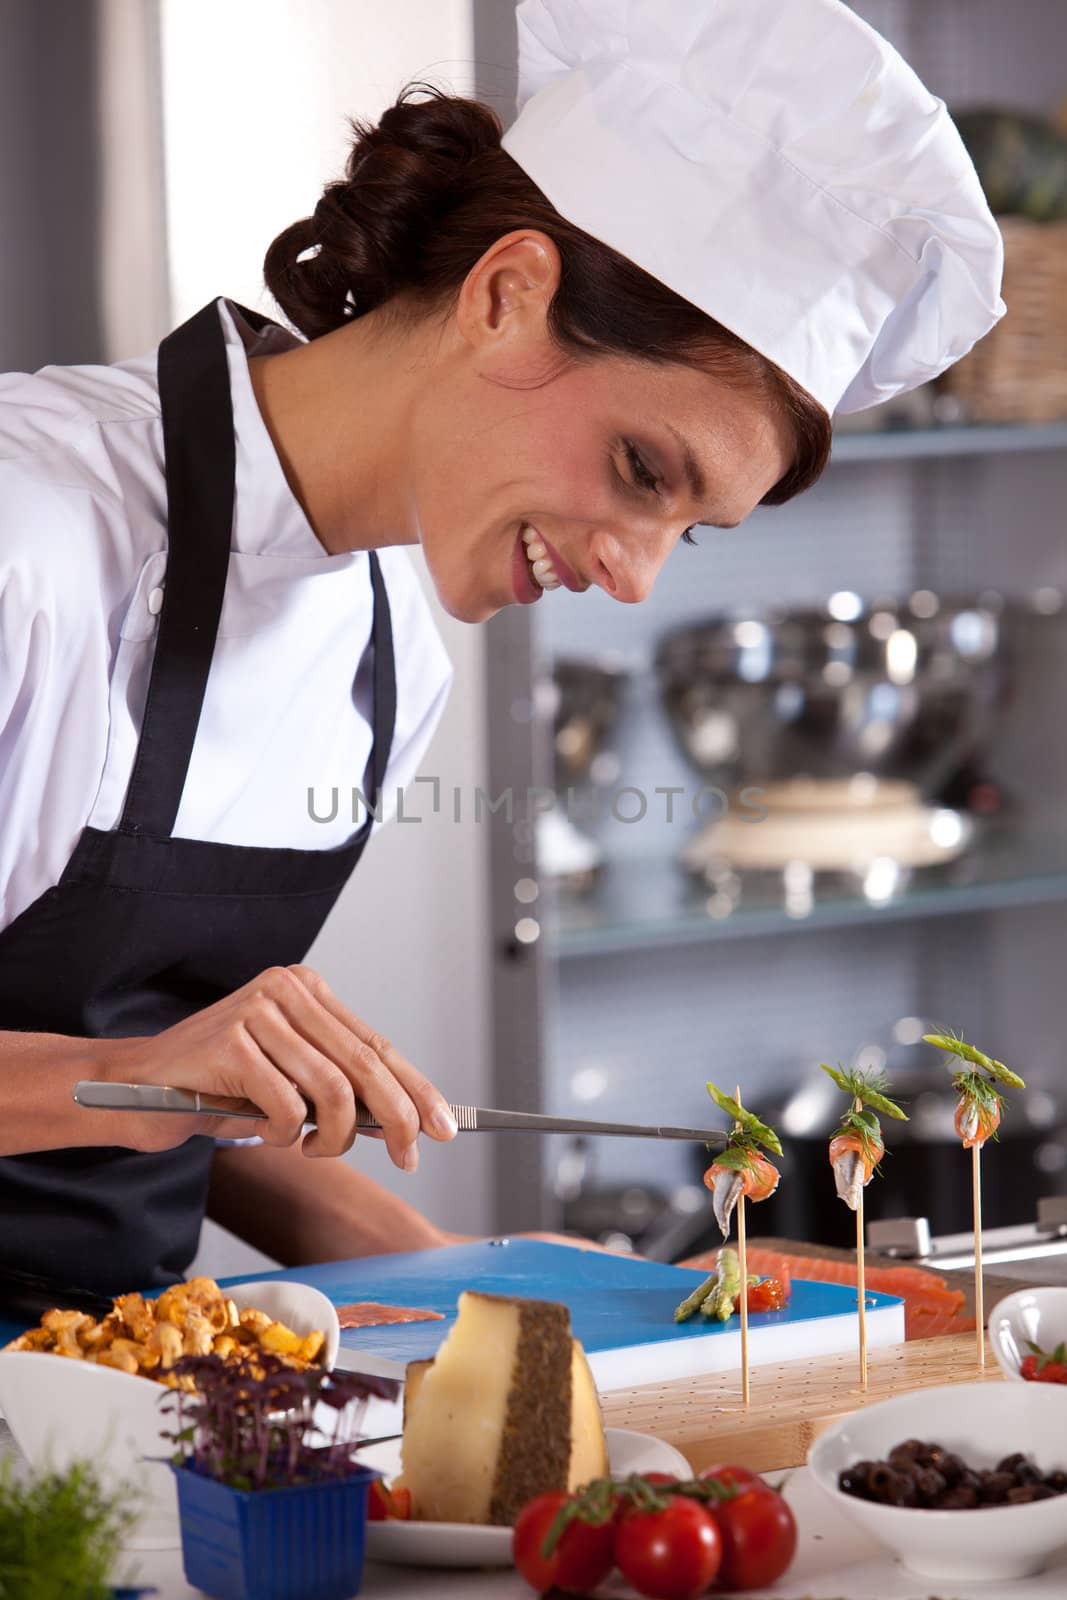 Attractive and happy female chef preparing an amuse